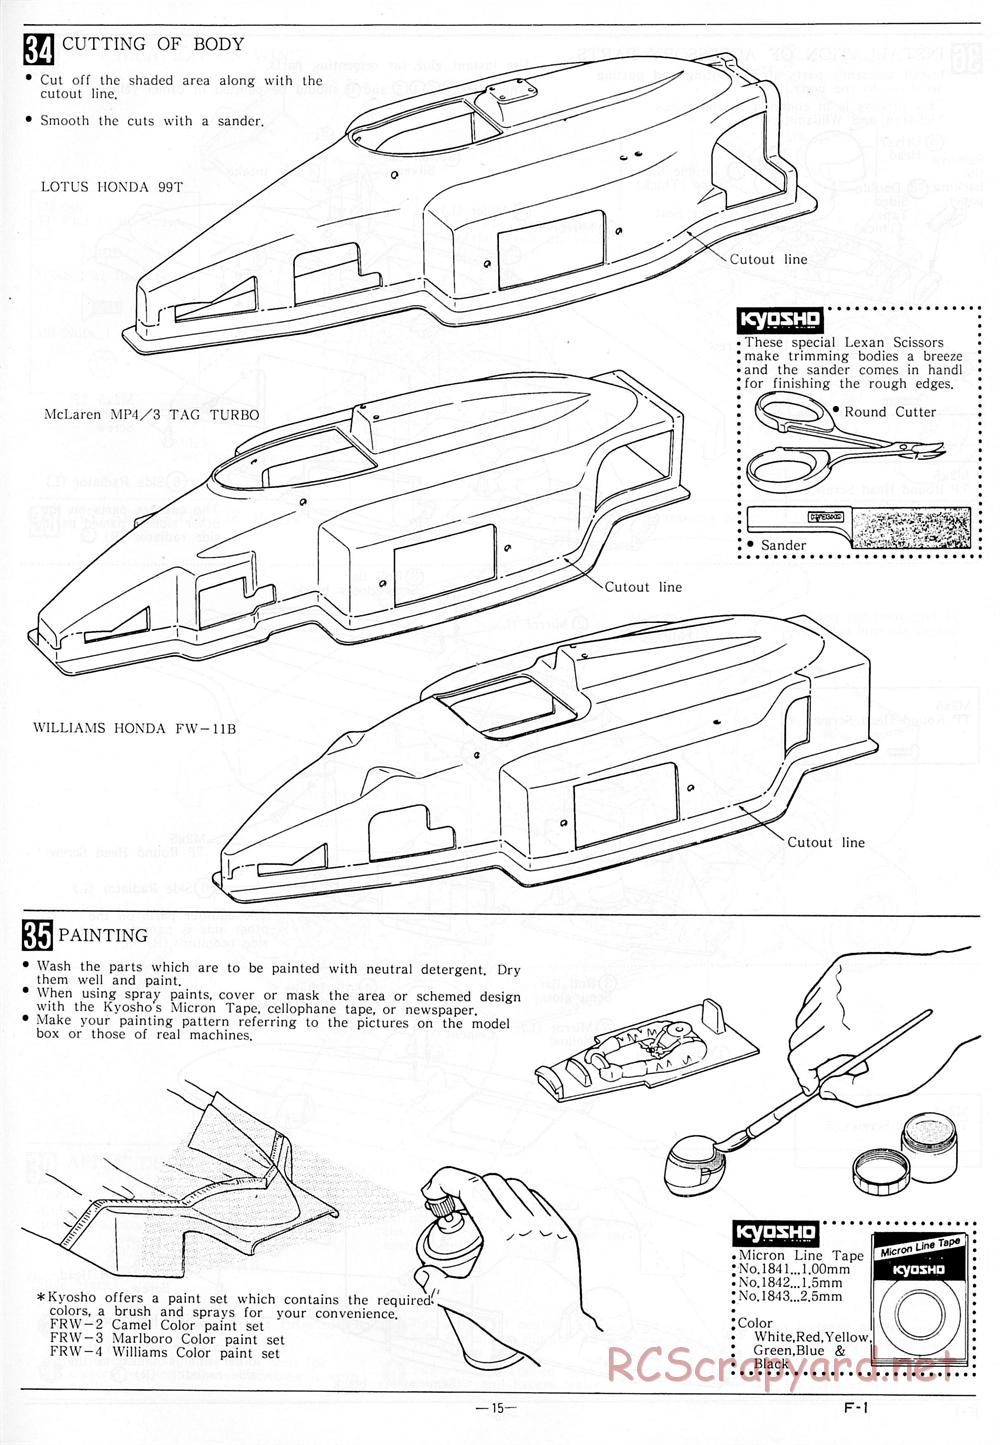 Kyosho - 1/18 Scale Formula One (F1) - Manual - Page 15